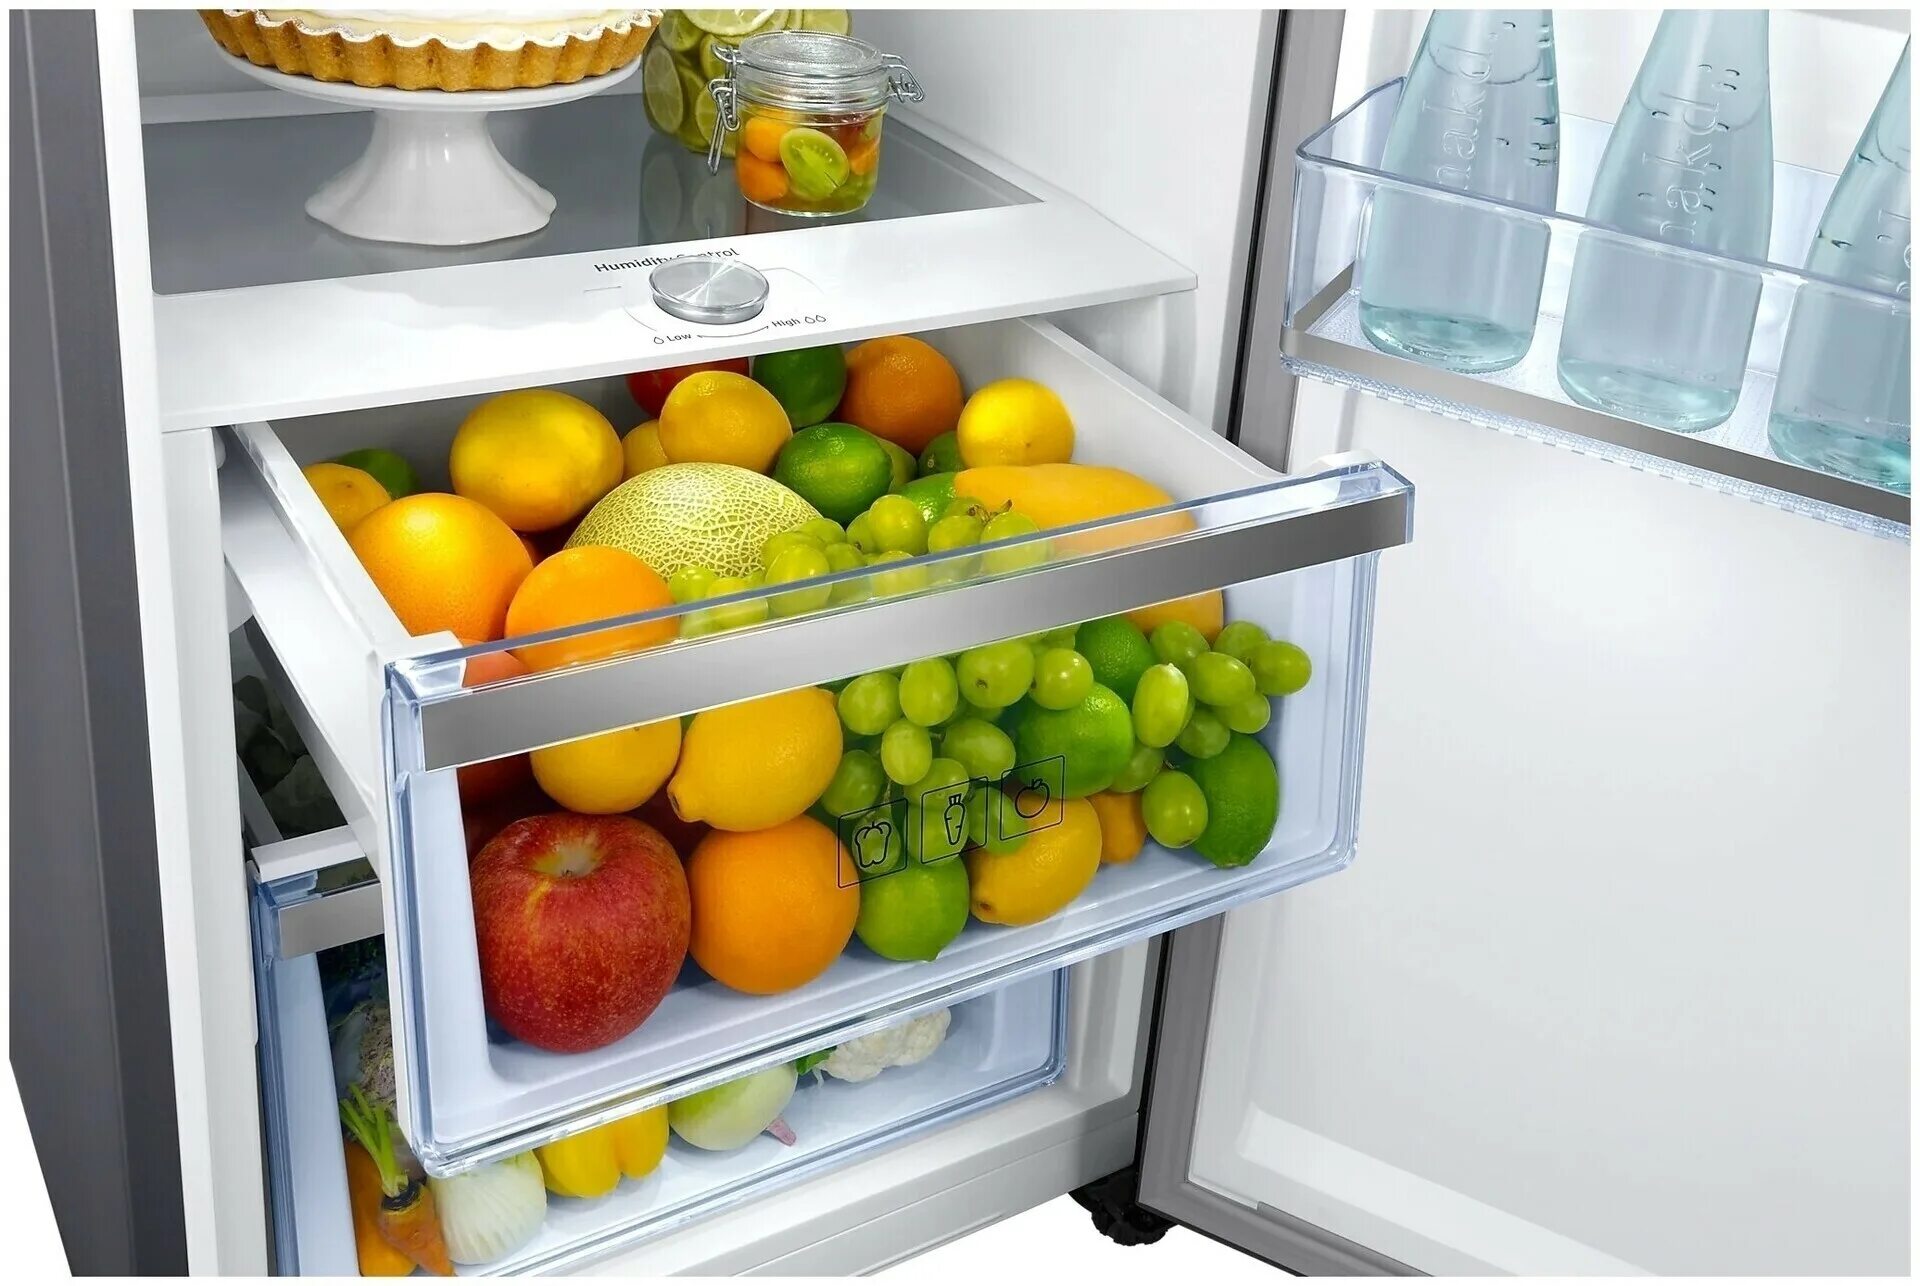 Холодильник rr39m7140sa. Холодильник Samsung rr39m7140sa/ua. Холодильник Samsung RR-39 m7140sa. Однокамерный холодильник Samsung rr39m7140sa. Встроенный холодильник no frost купить